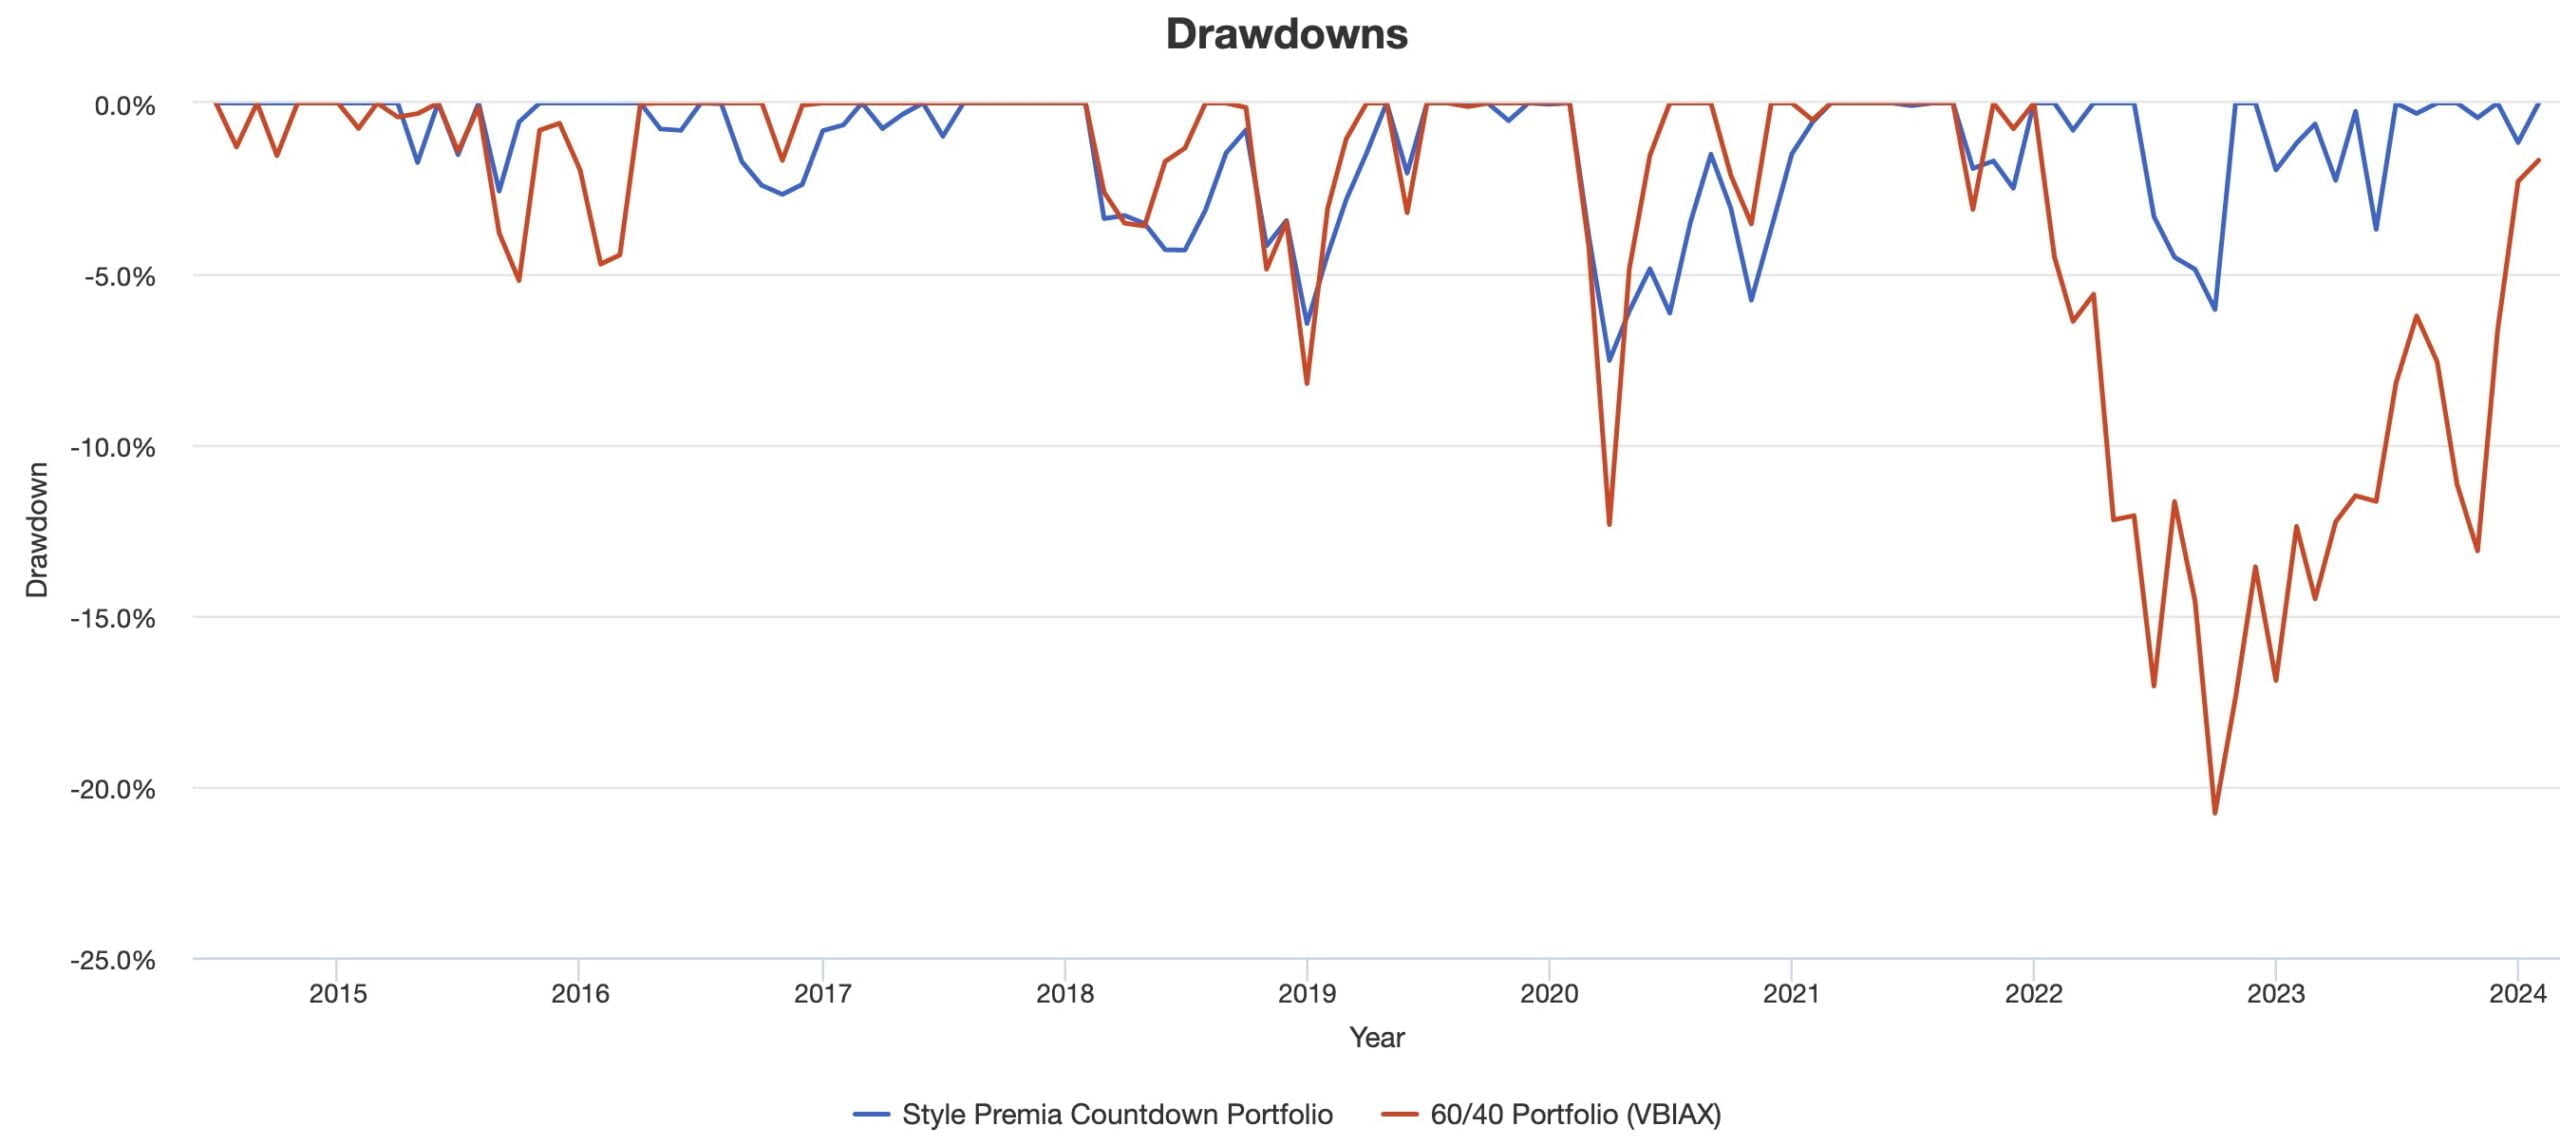 Countdown Portfolio drawdown management compared to a 60/40 portfolio 